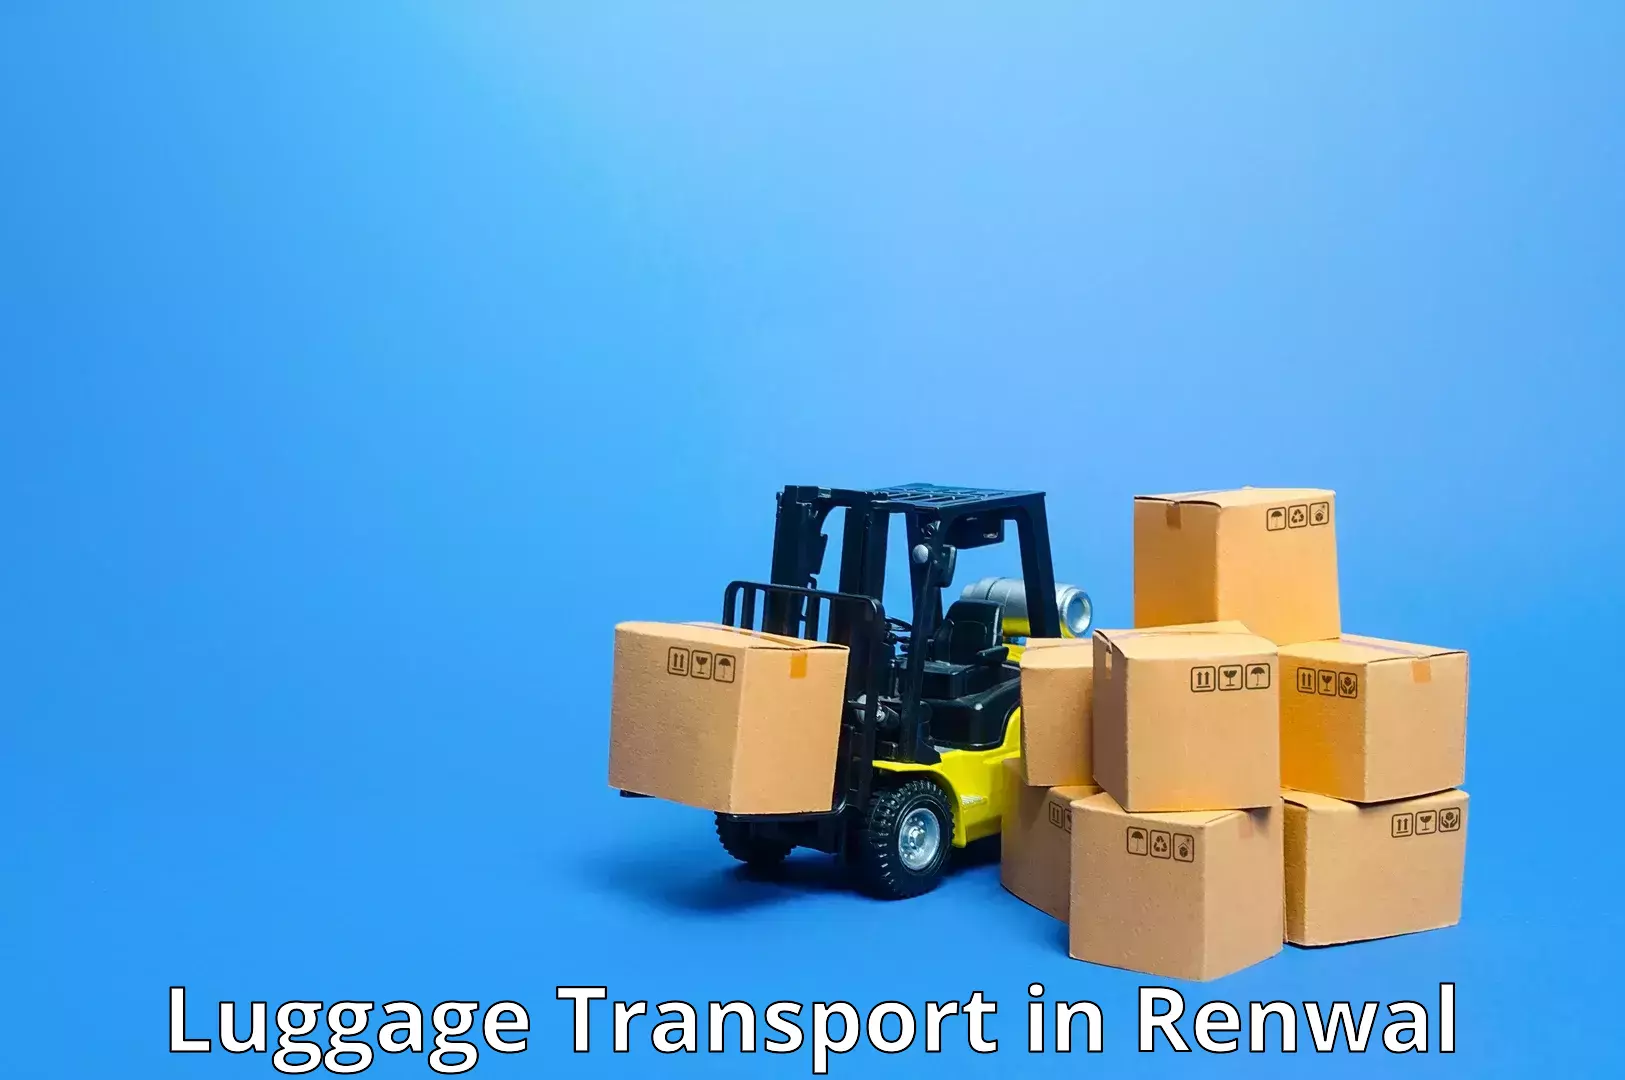 Regional luggage transport in Renwal